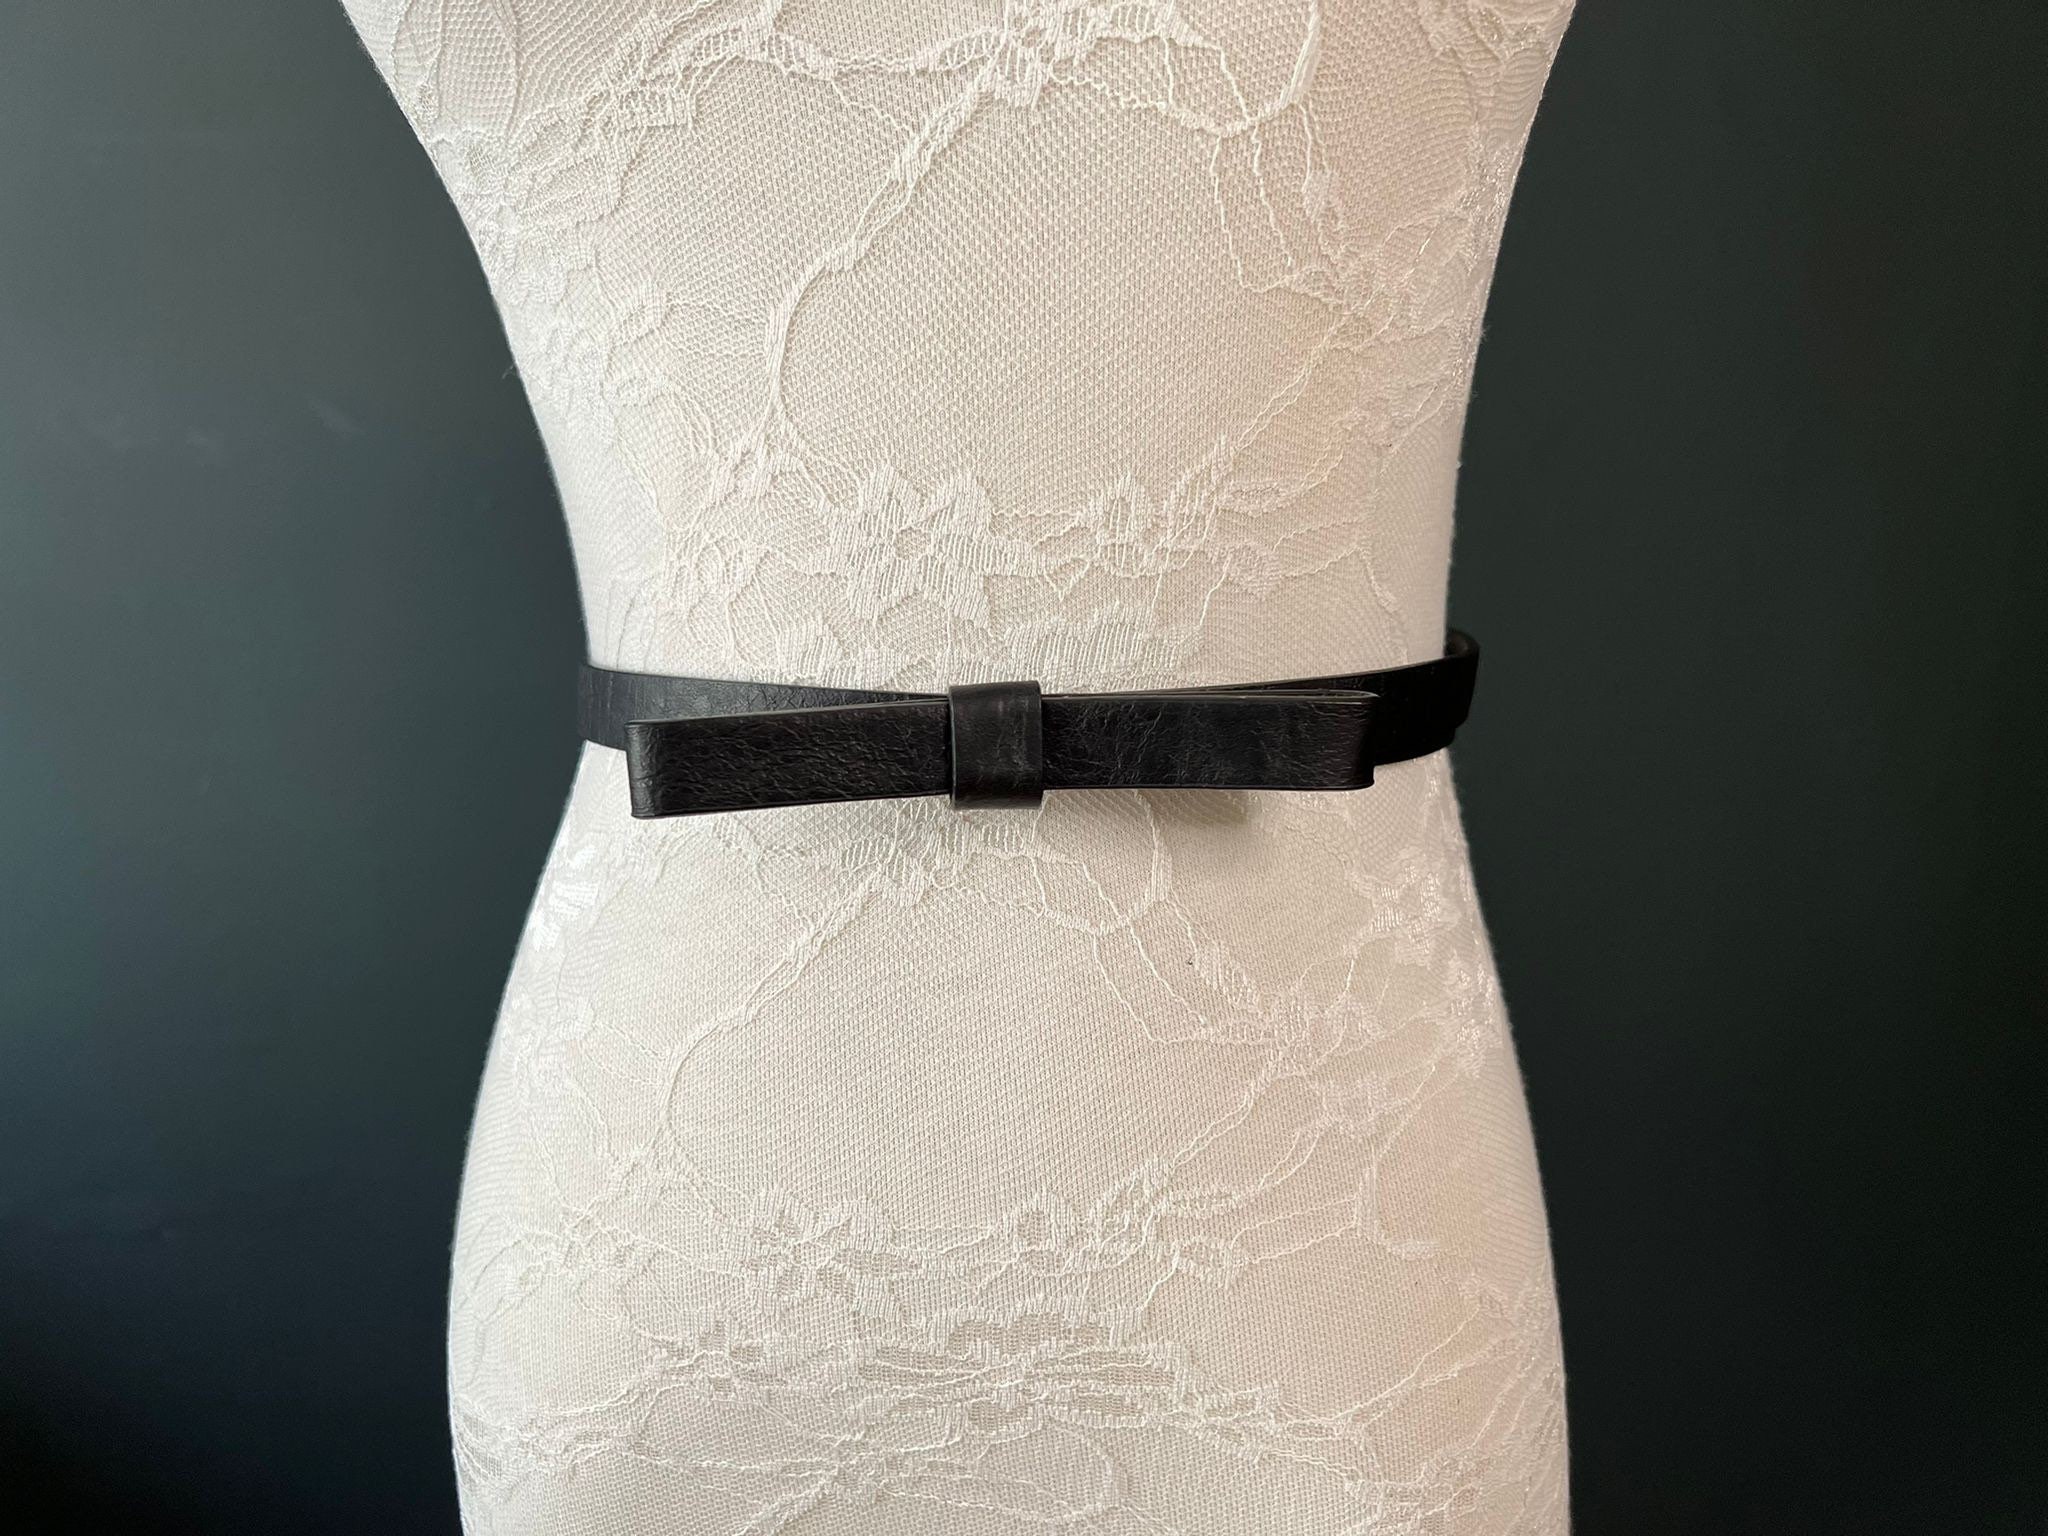 Bohend Wide Waist Belt Black Dress Belts Solid Color Retro Self Tie Dress  Belt for Women and Girls